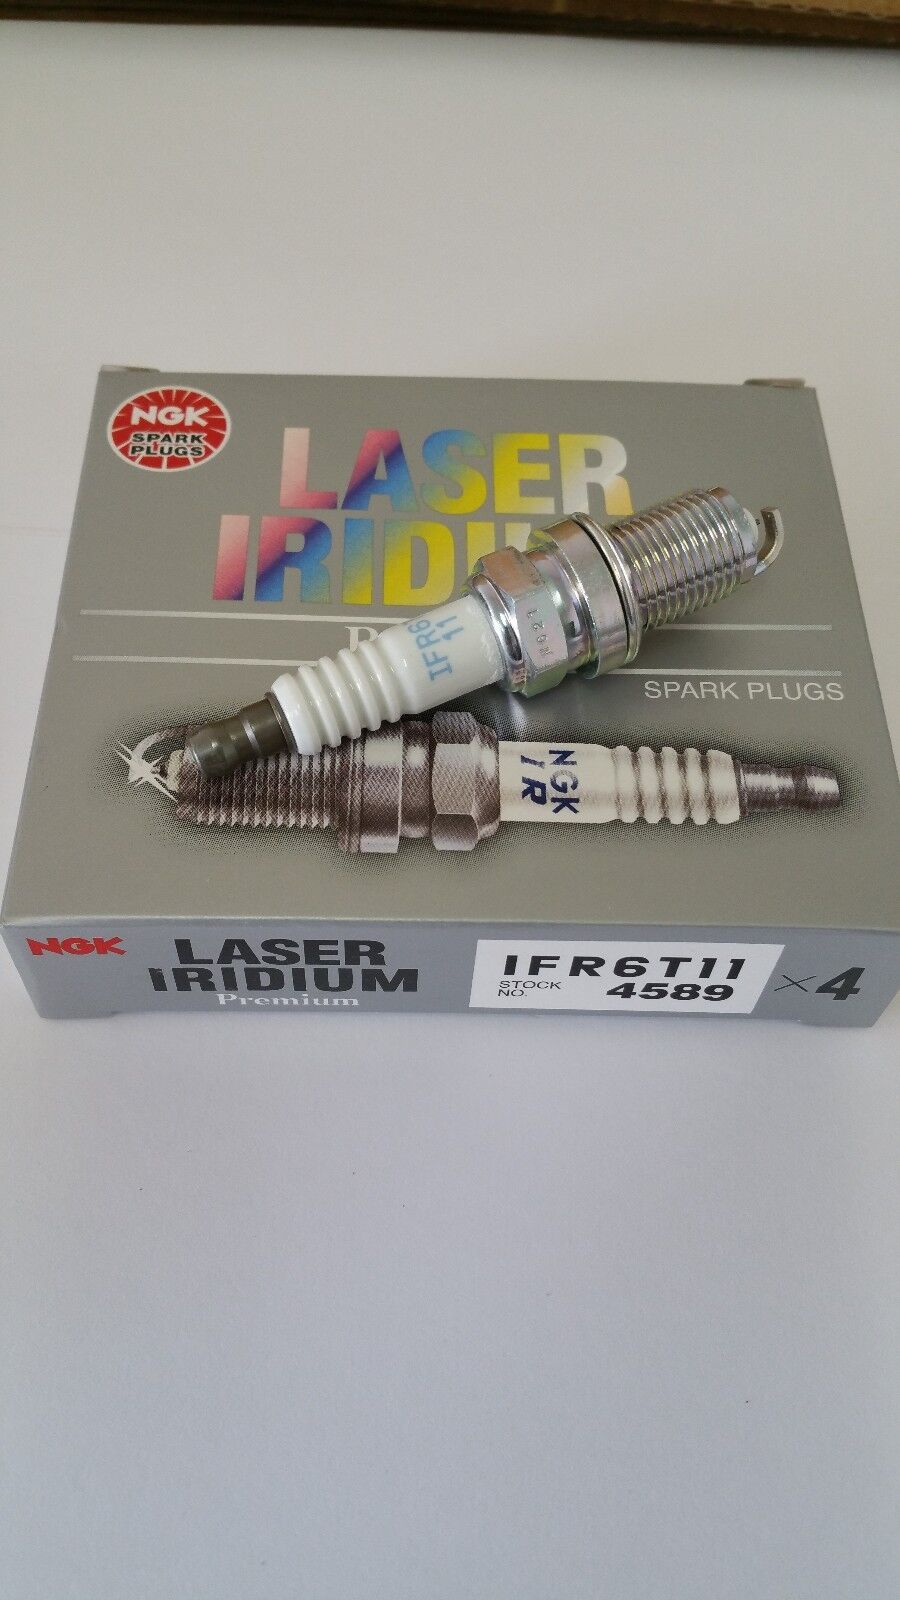 Set of 4 NGK 4589 Laser Iridium Resistor Performance Power Spark Plugs IFR6T11 